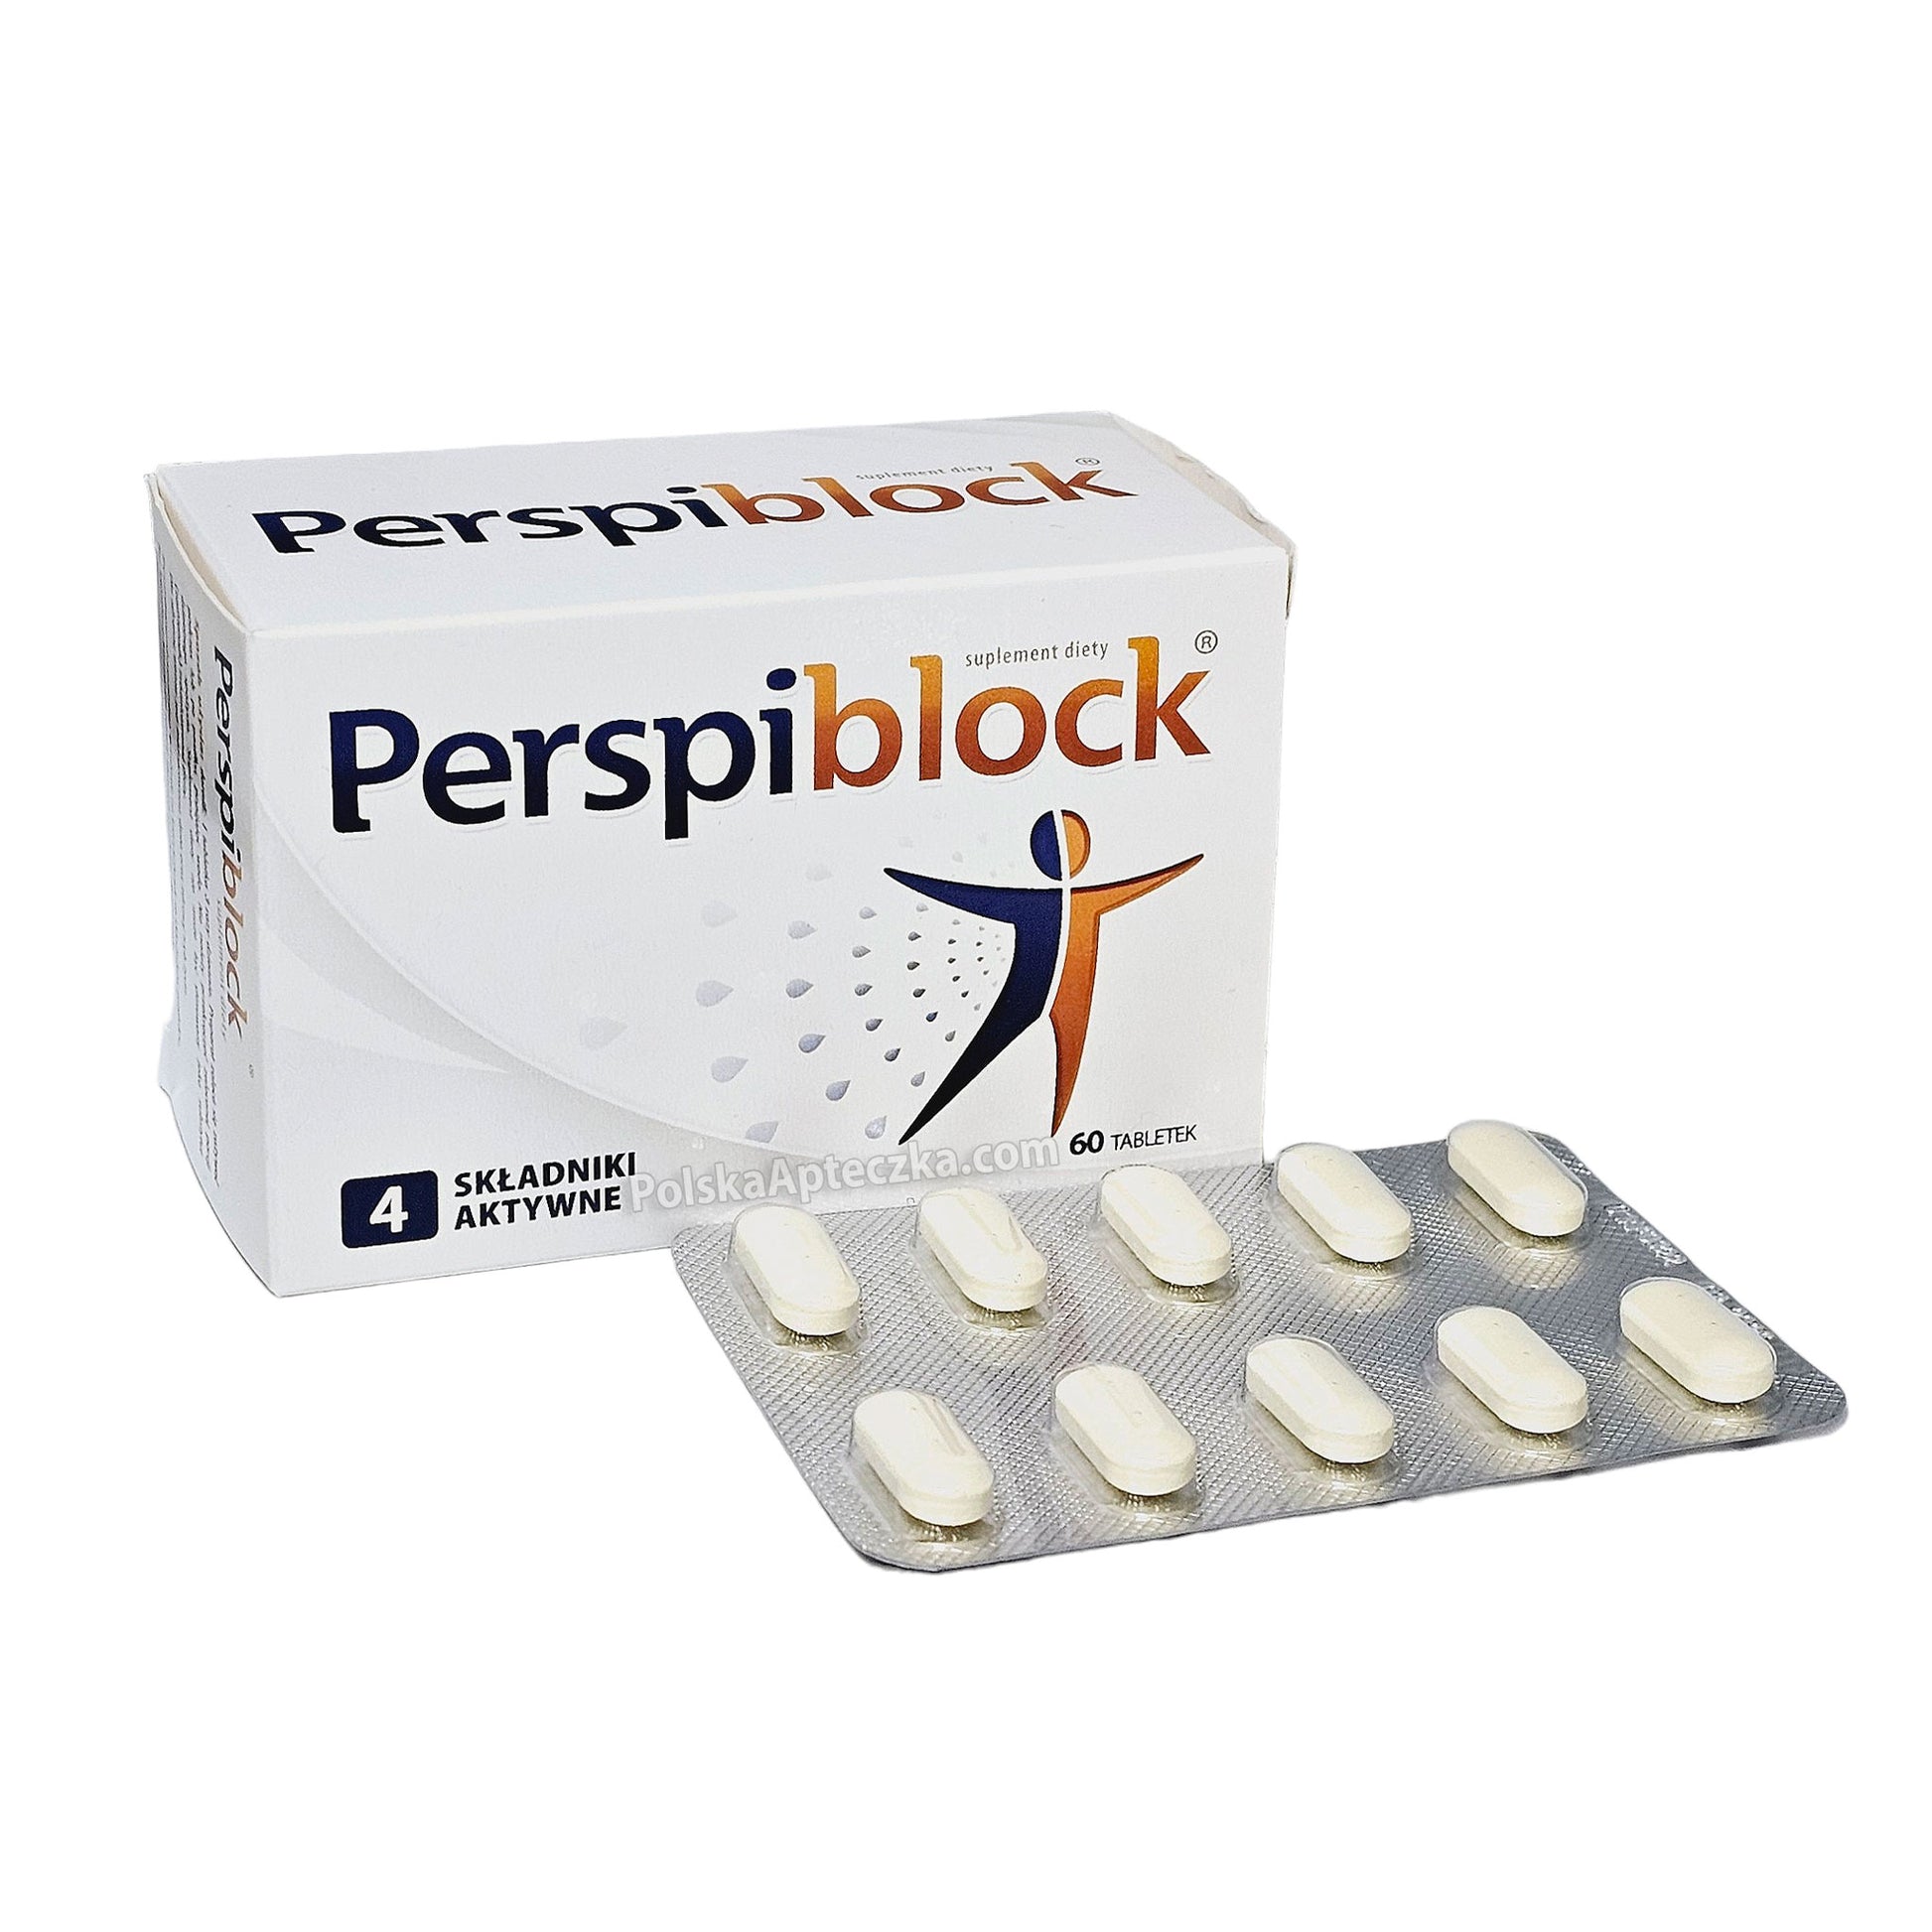 perspiblock tablets